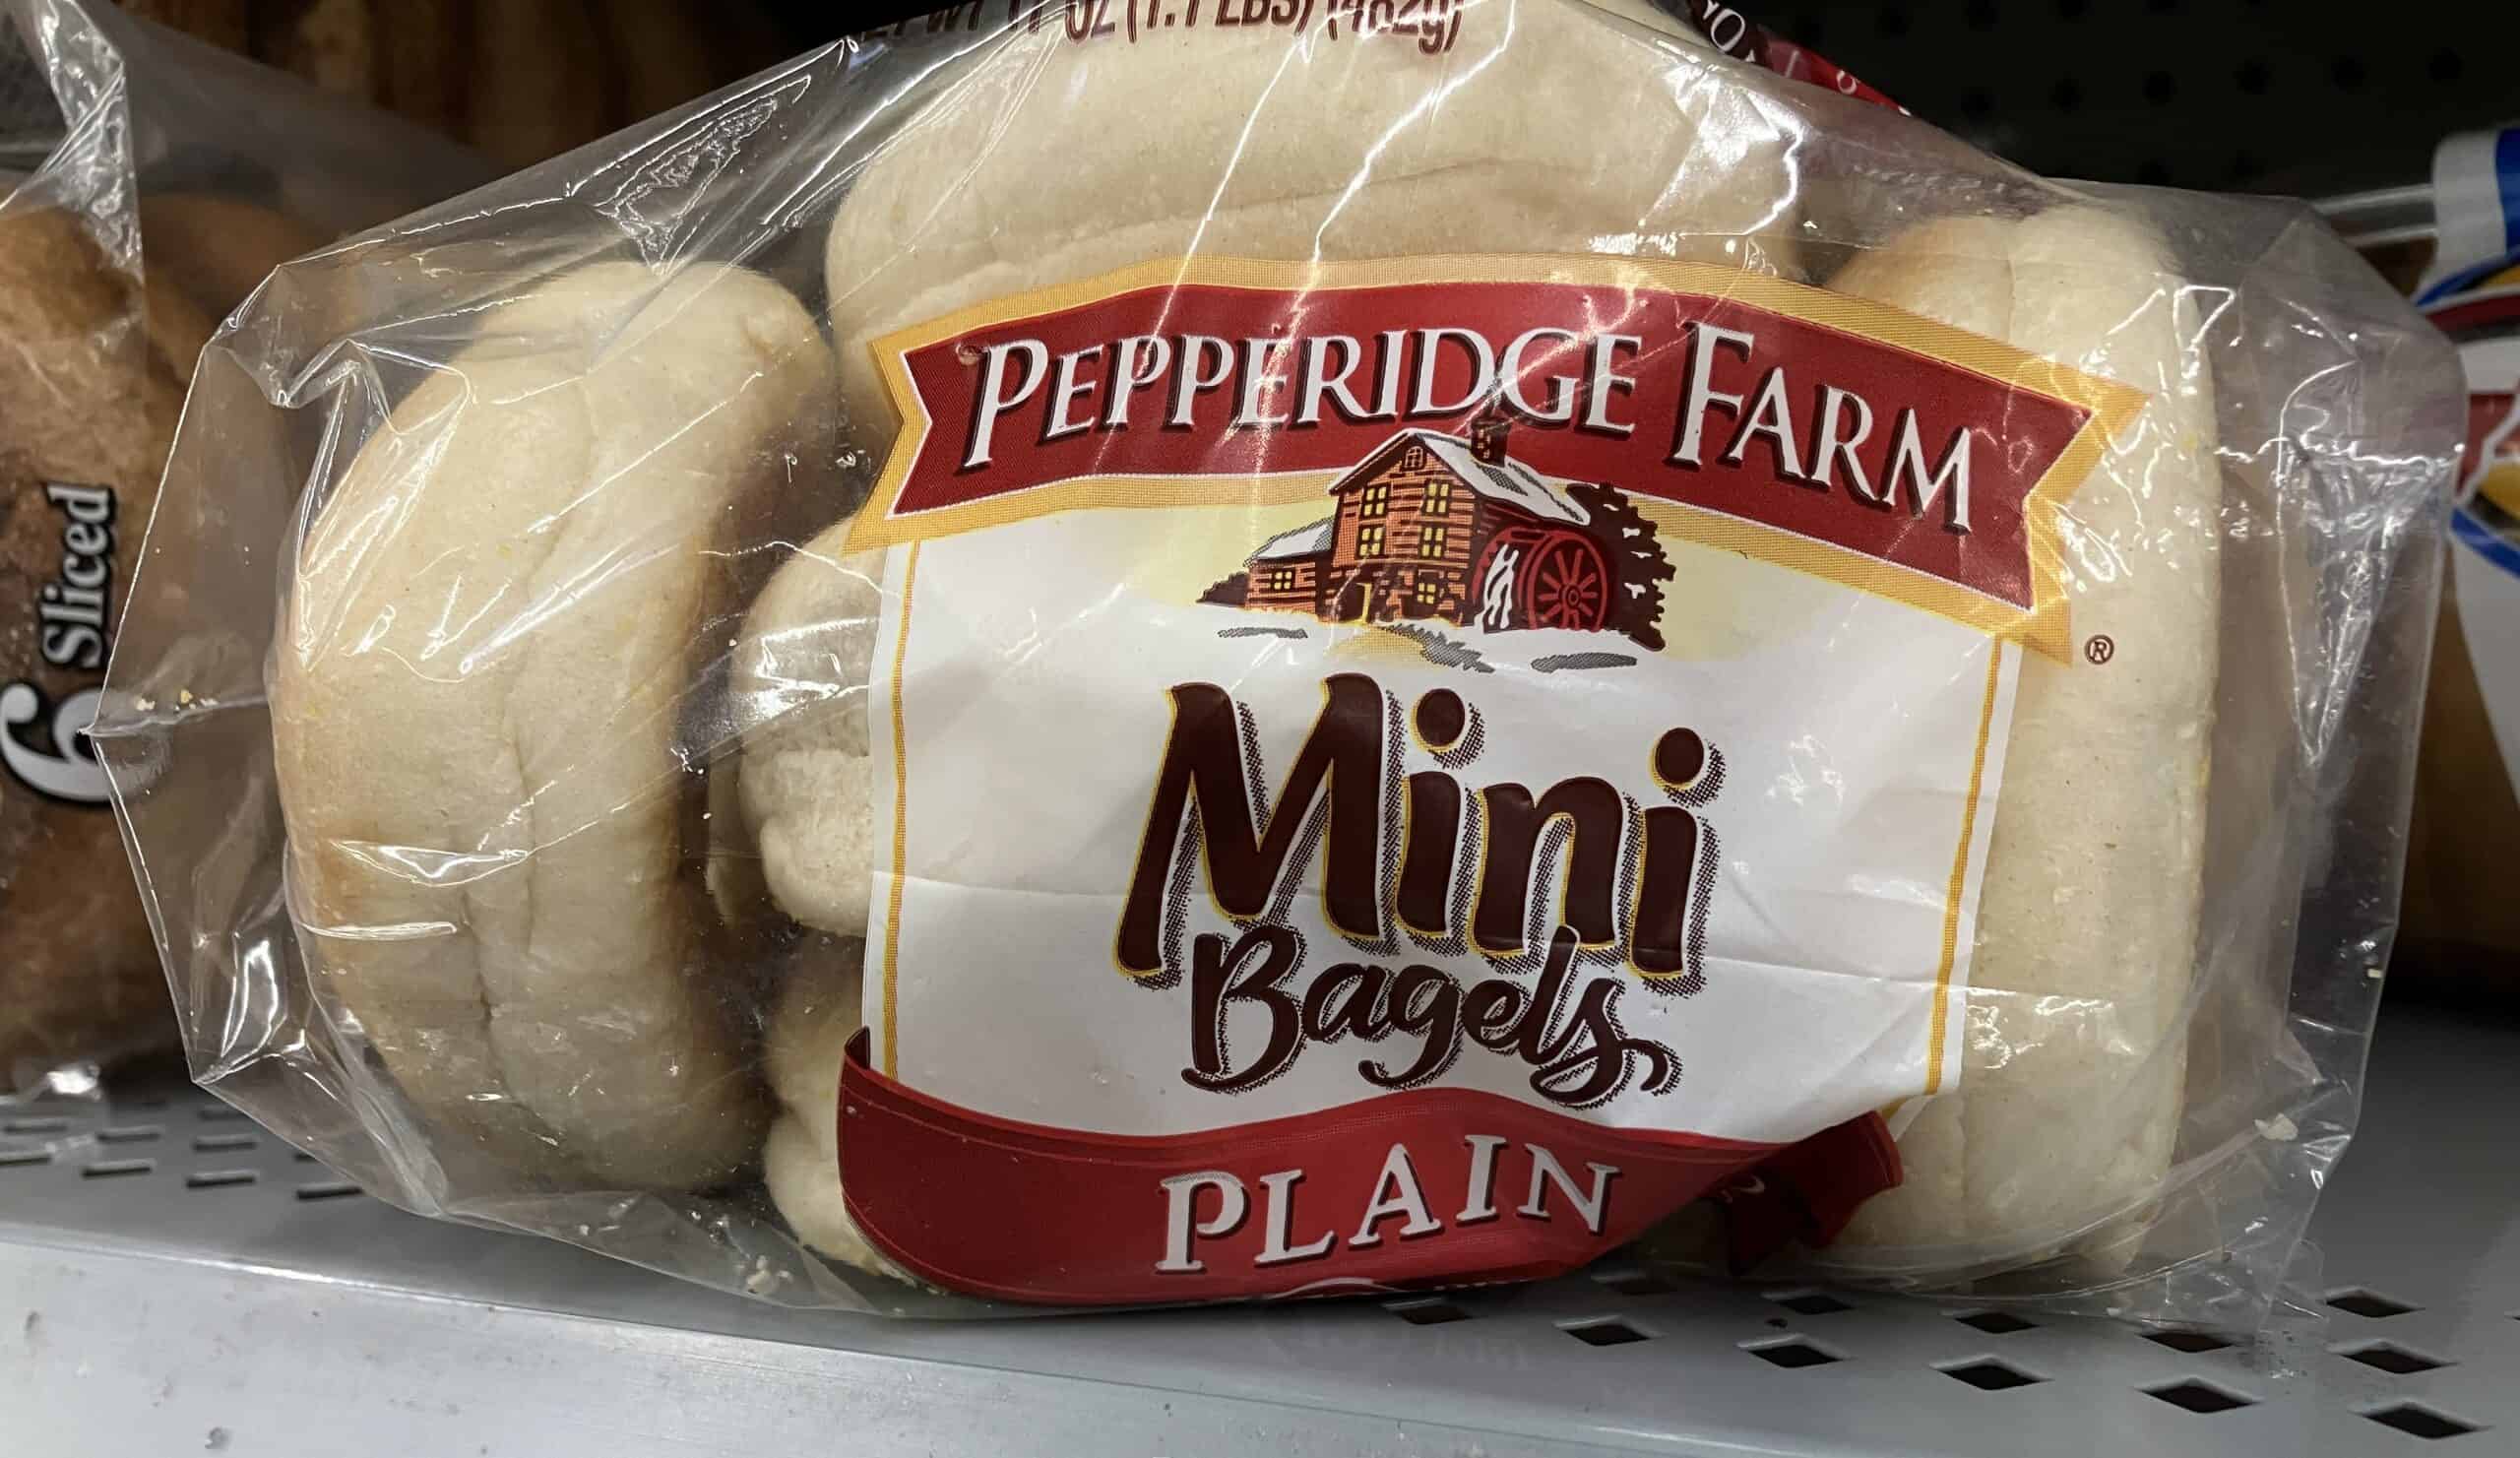 Pepperidge Farm mini bagels